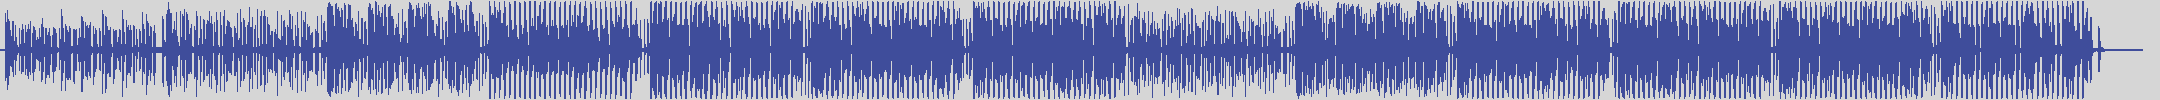 nf_boyz_records [NFY034] Klimt - Type [Deephouse Mix] audio wave form